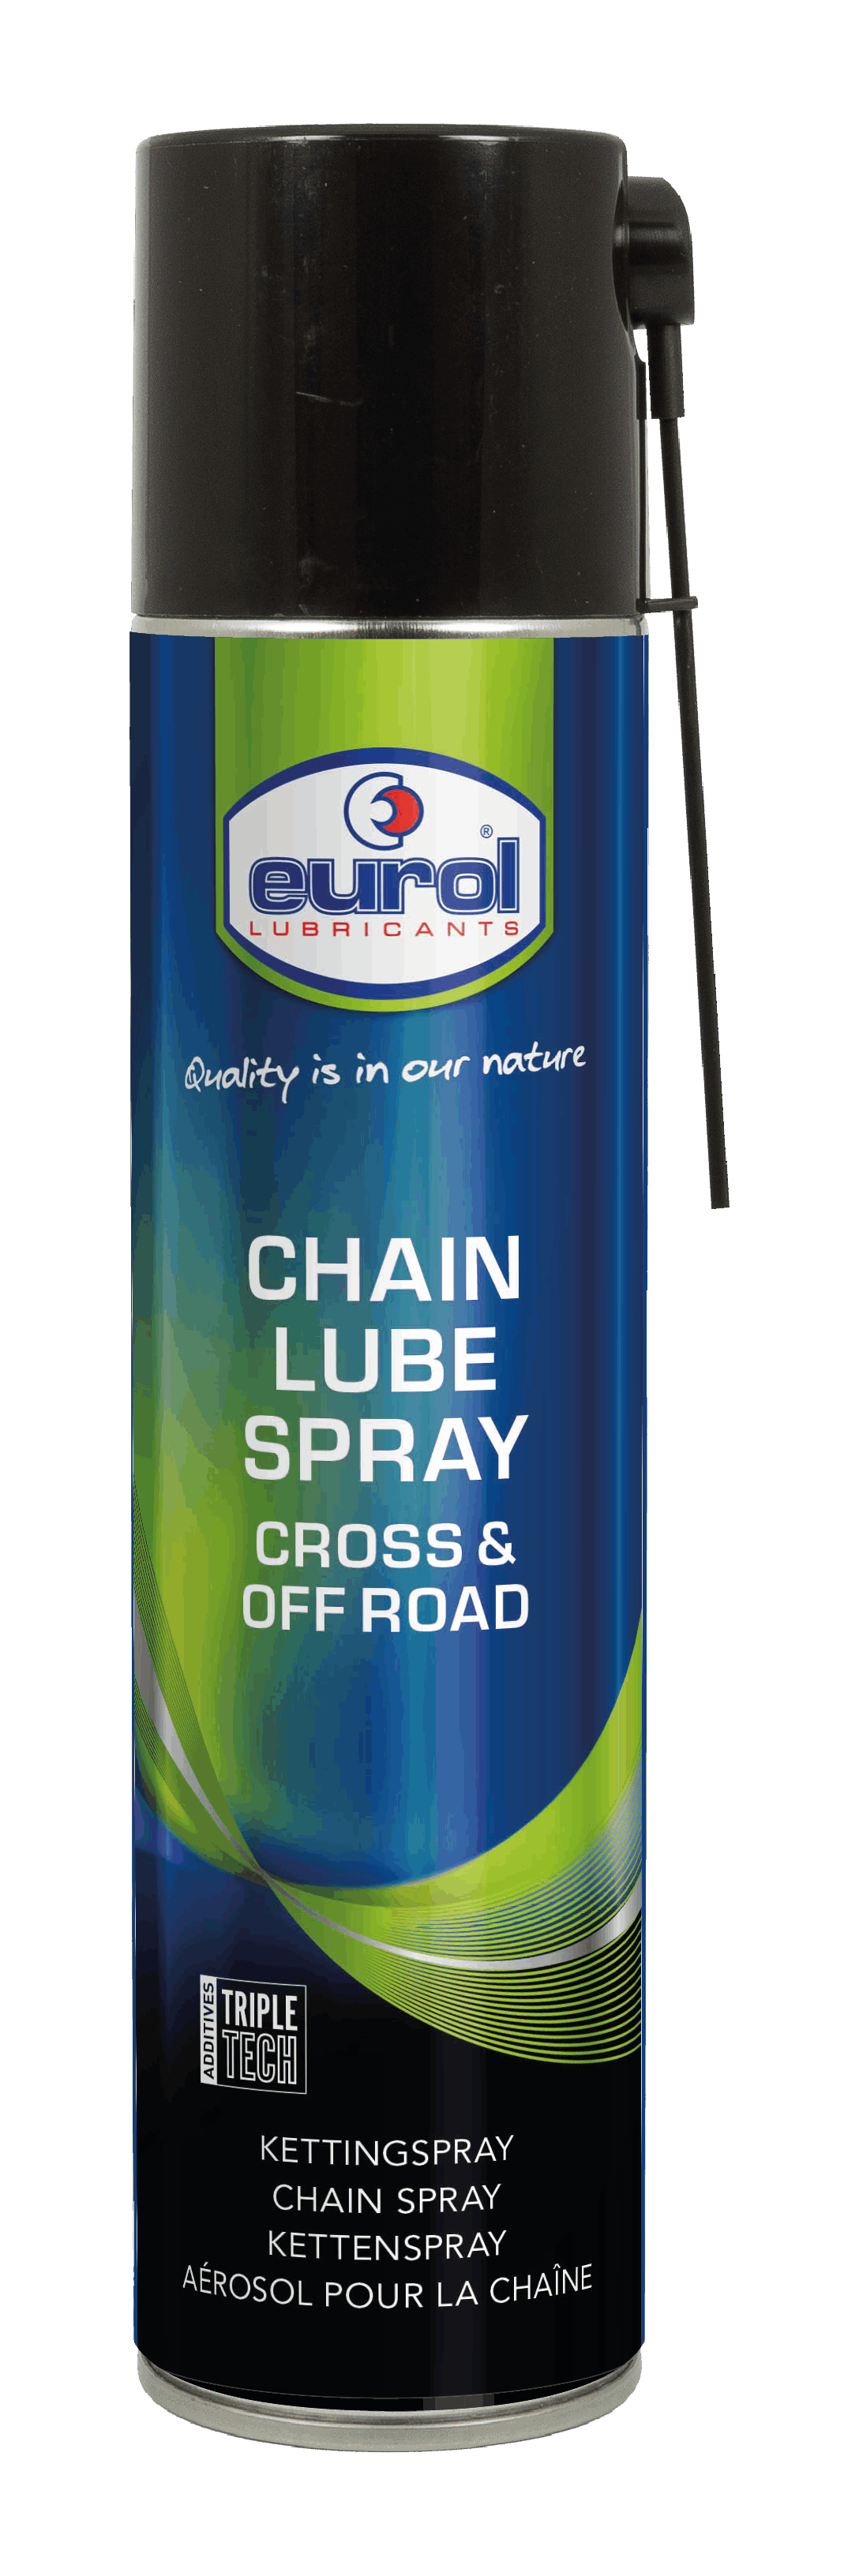 Chain Lube Spray Cross & Off road